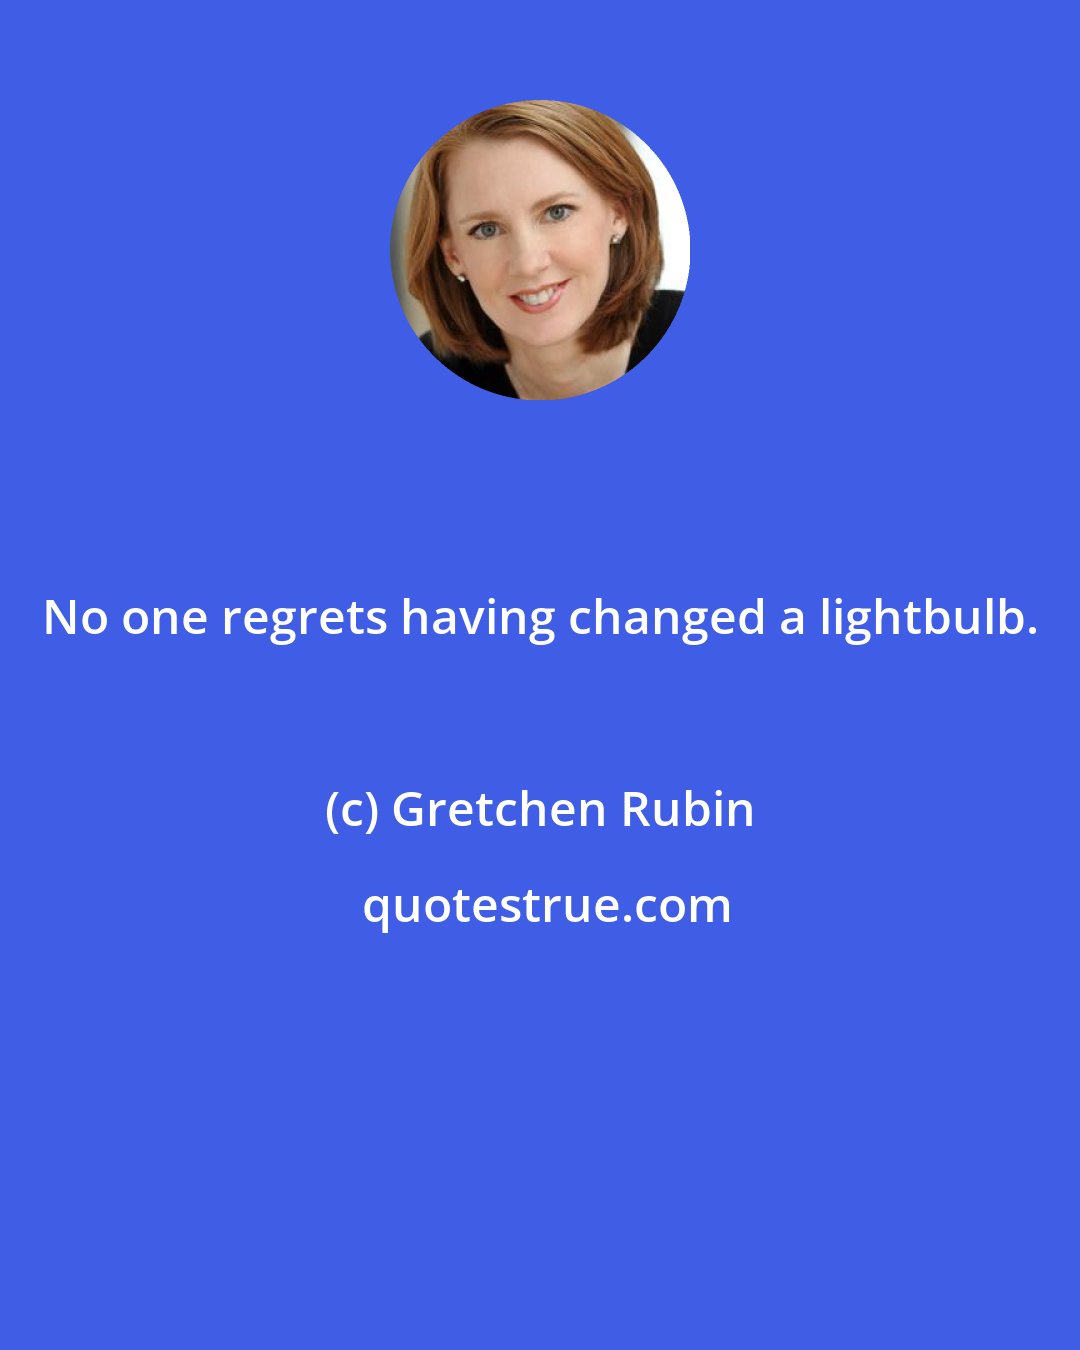 Gretchen Rubin: No one regrets having changed a lightbulb.